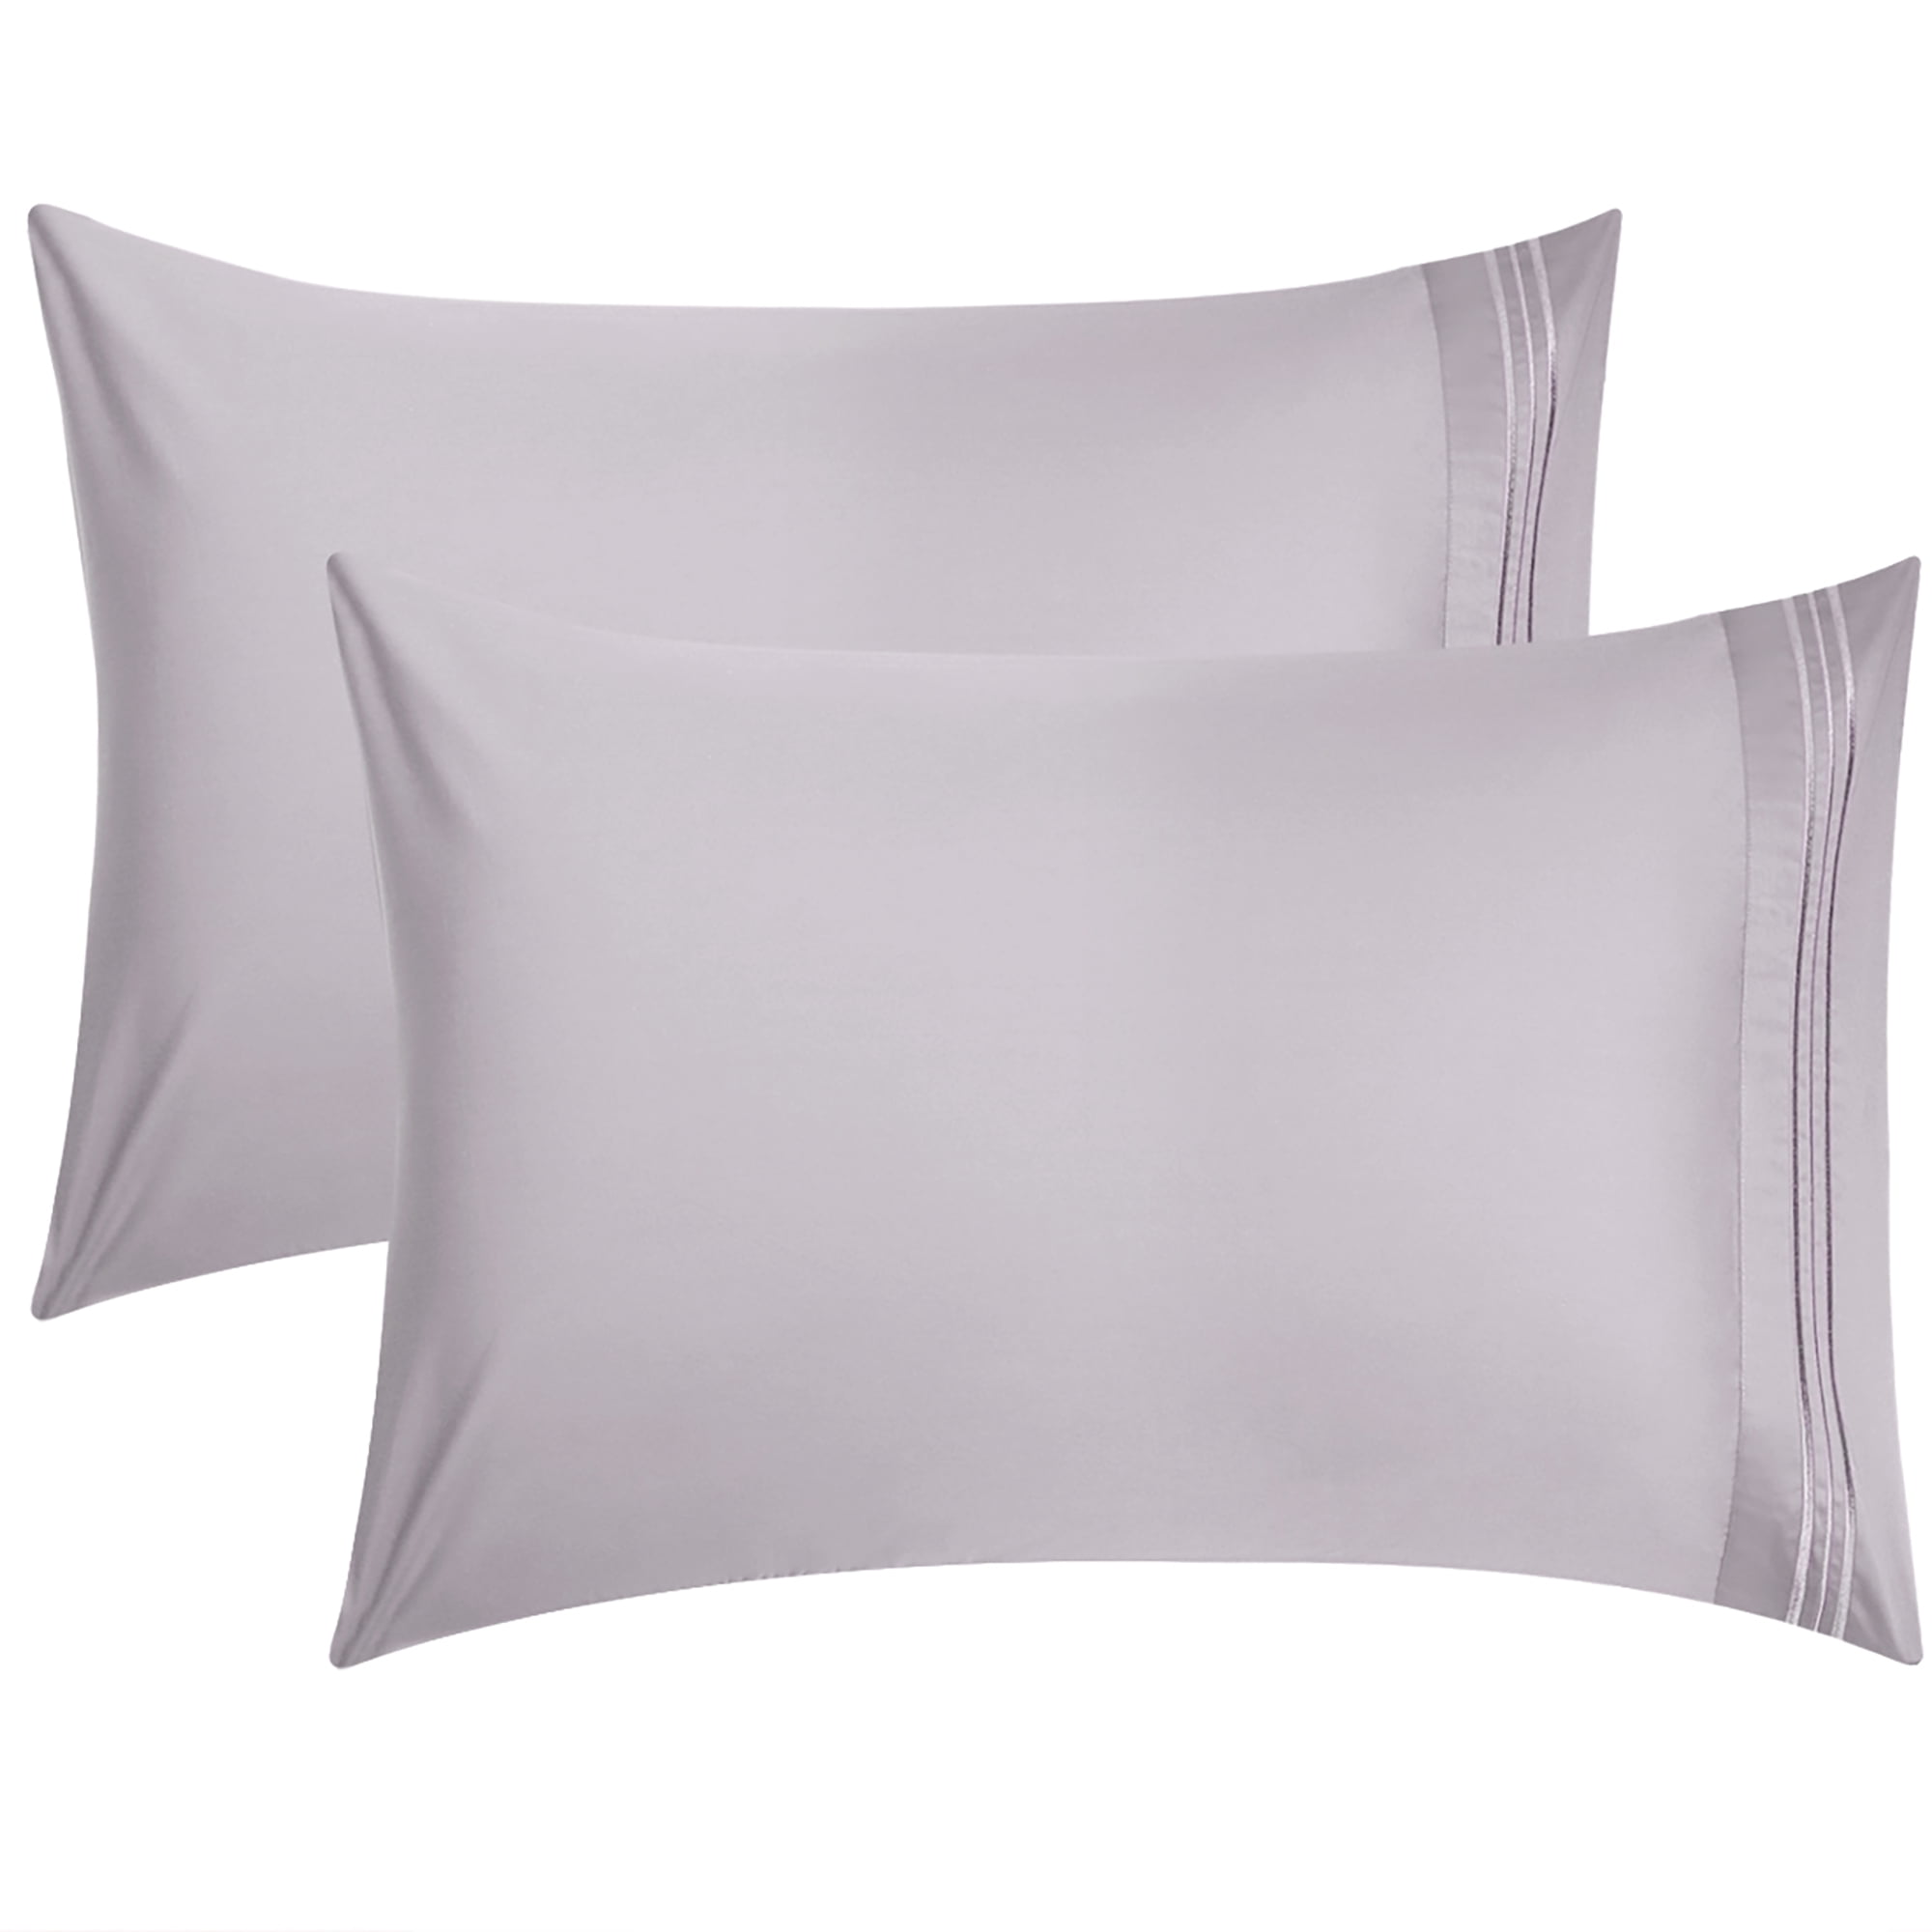 Threshold Orange Geo KING Organic Cotton Pillowcases set of 2 New 